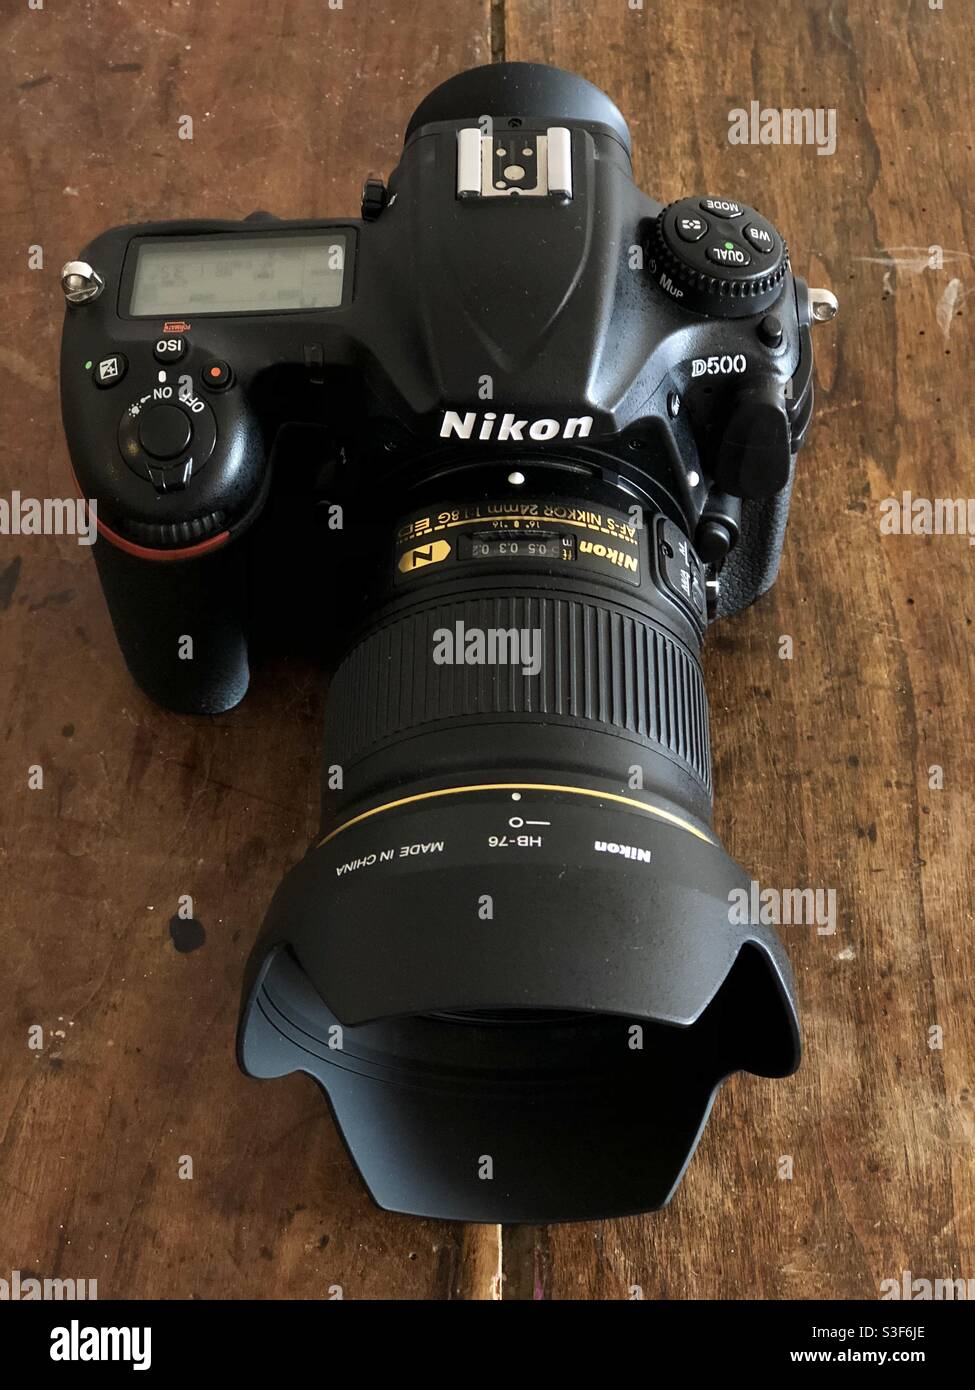 Nikon d500 fotografías e imágenes de alta resolución - Alamy